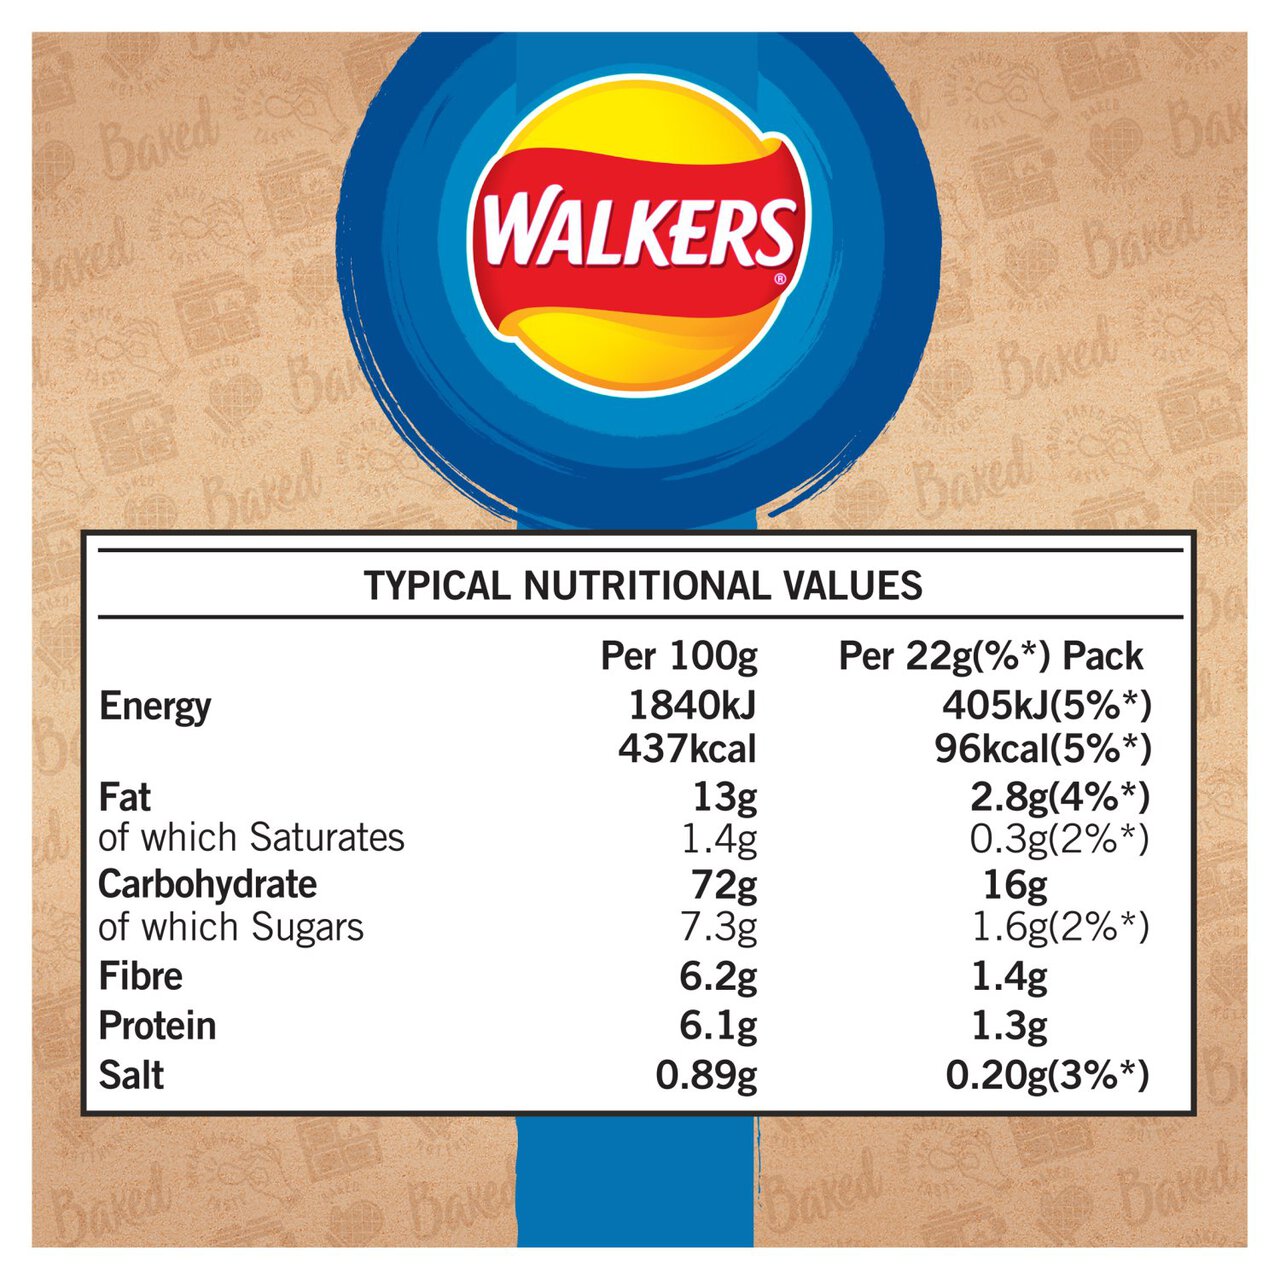 Walkers Baked Cheese & Onion Multipack Snacks 6 per pack